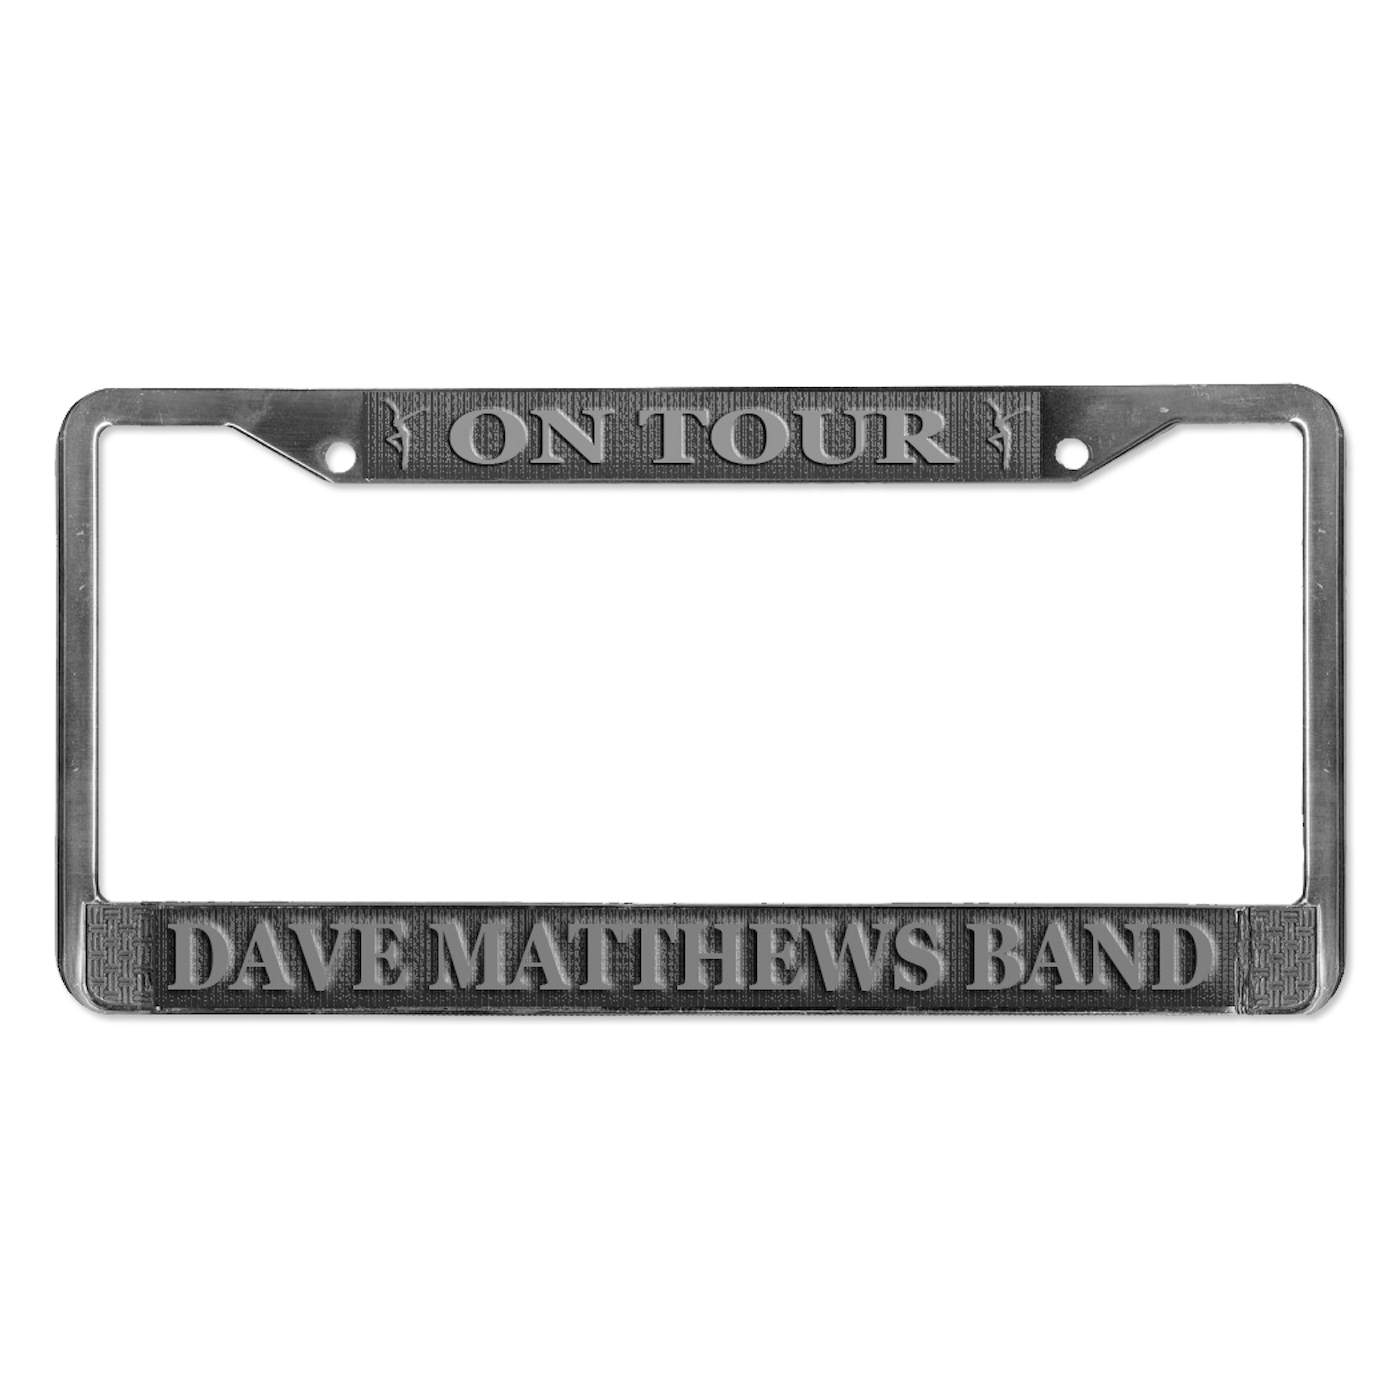 Dave Matthews Band On Tour License Plate Frame